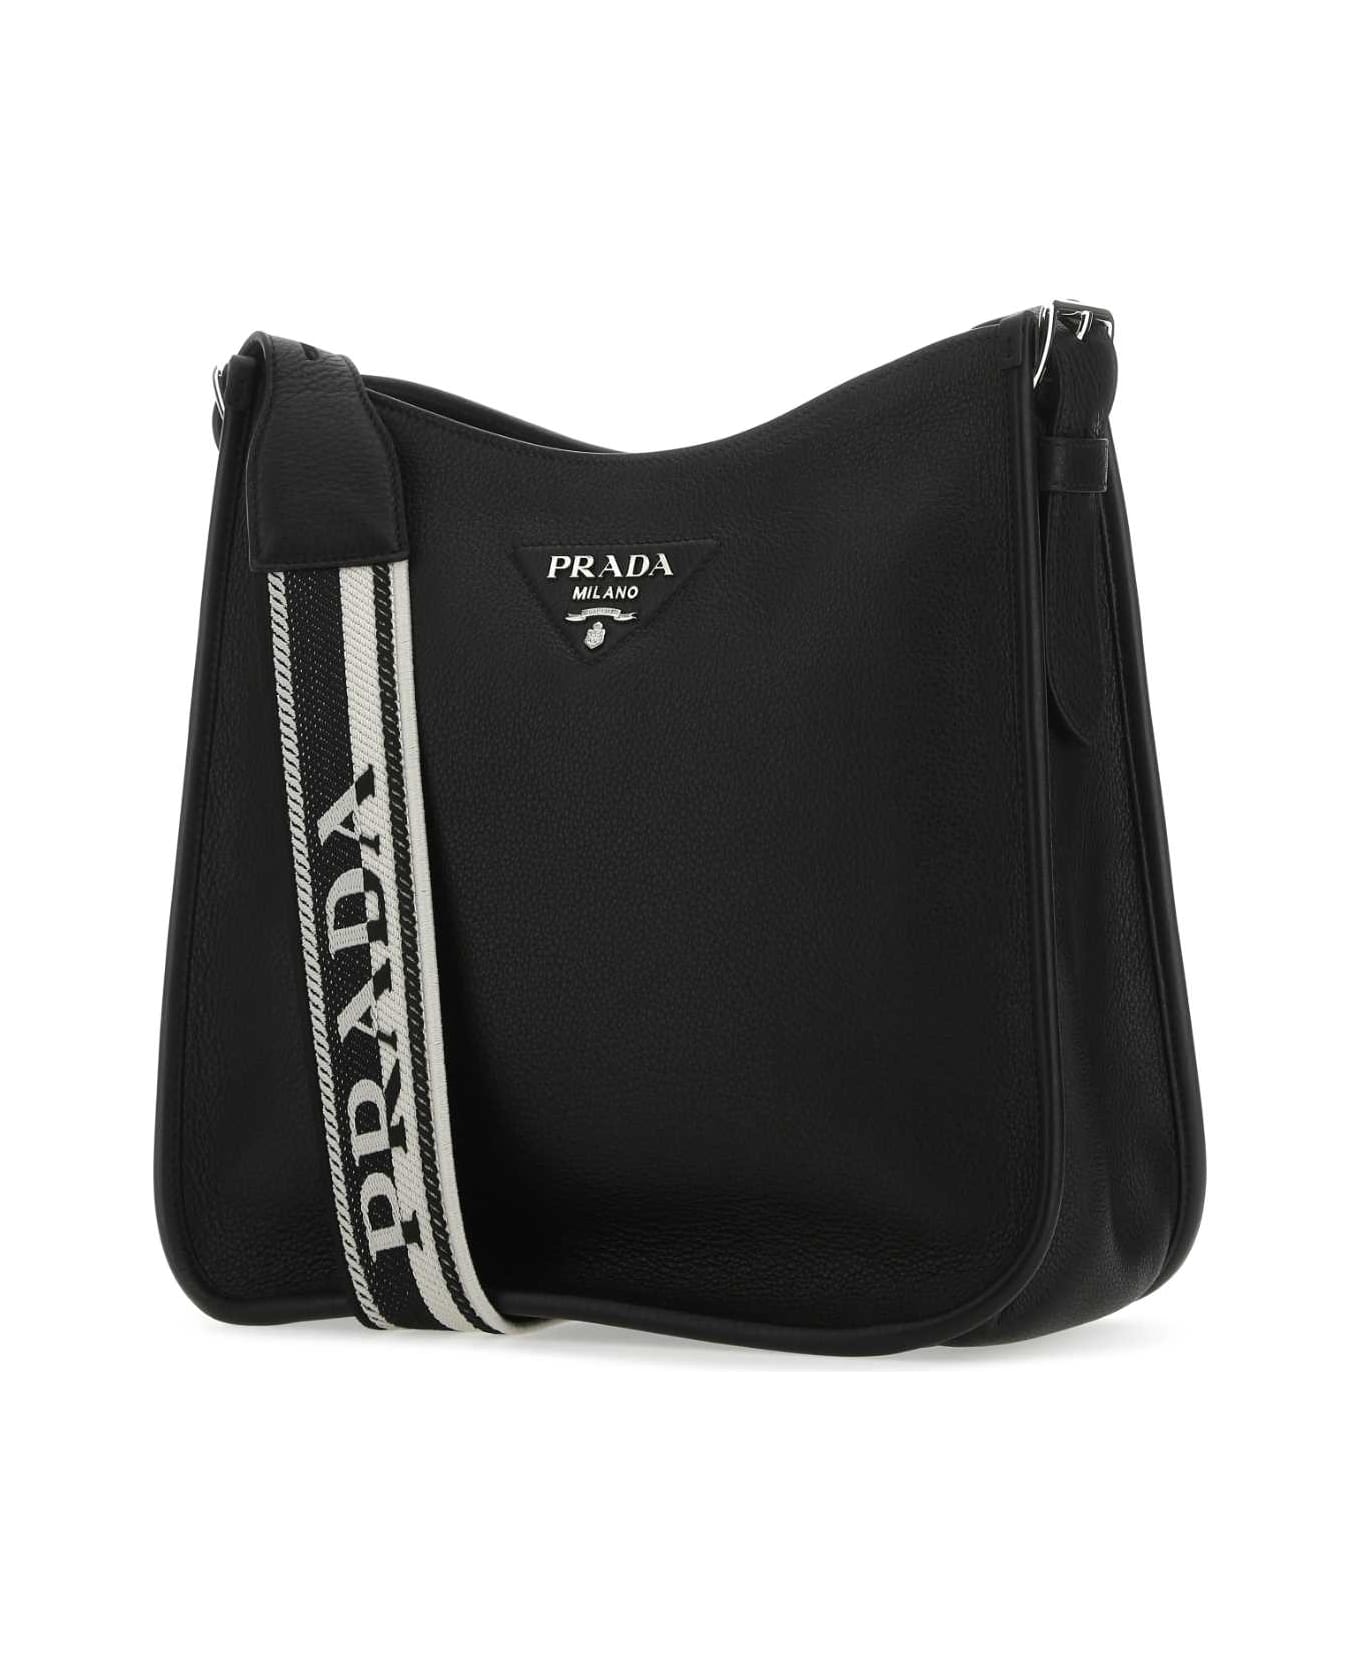 Prada Black Leather Crossbody Bag - Black